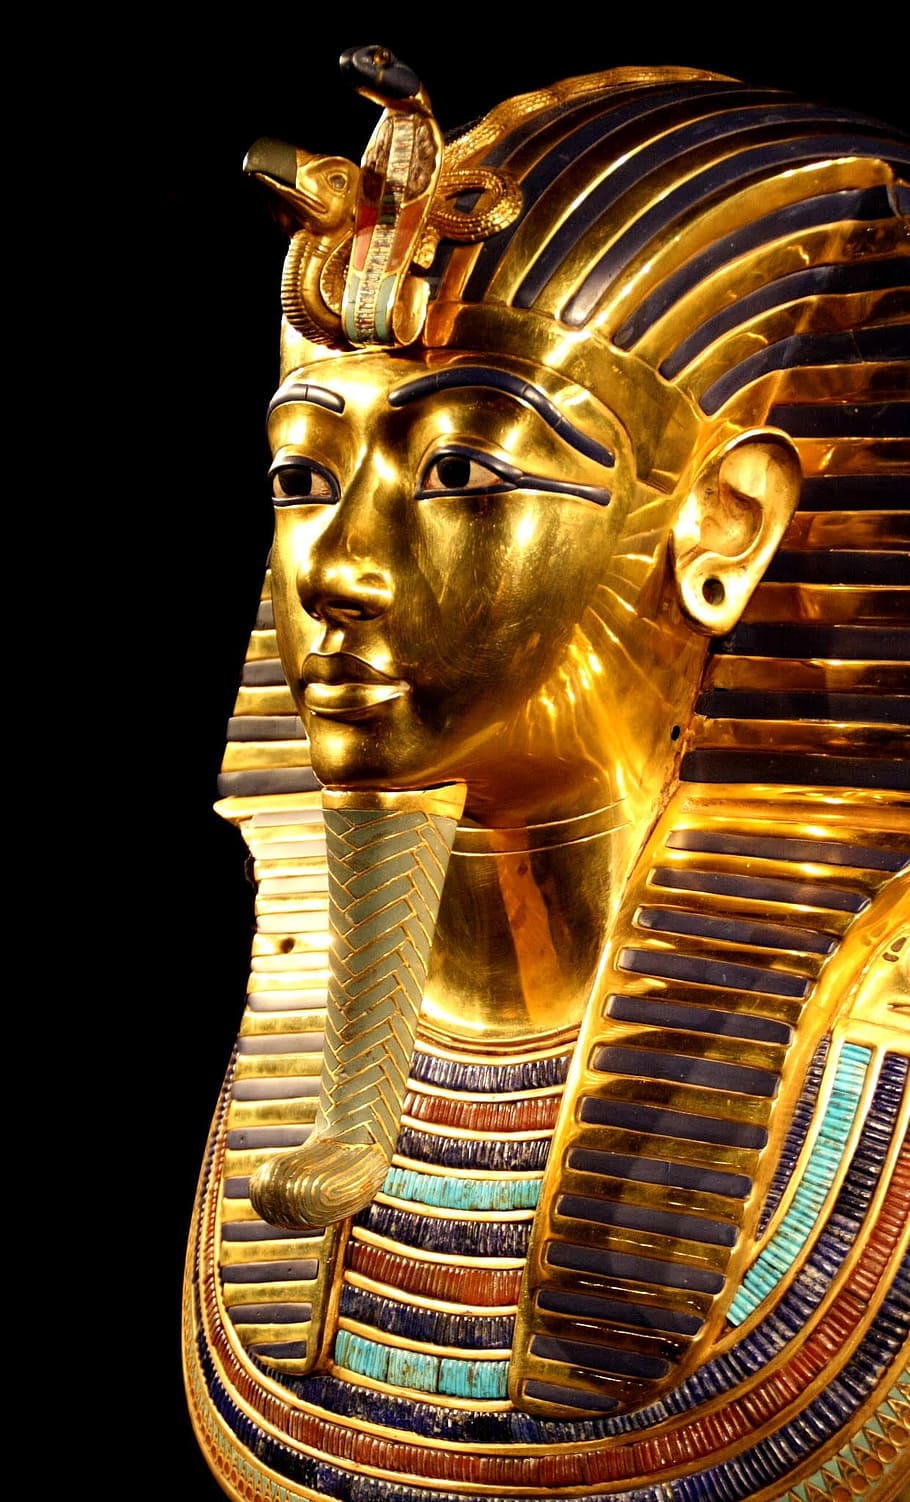 estatua de nefertiti, tutankamón, máscara de muerte, faraónico, egipto, escultura, estatua, arte y artesanía, color dorado, representación